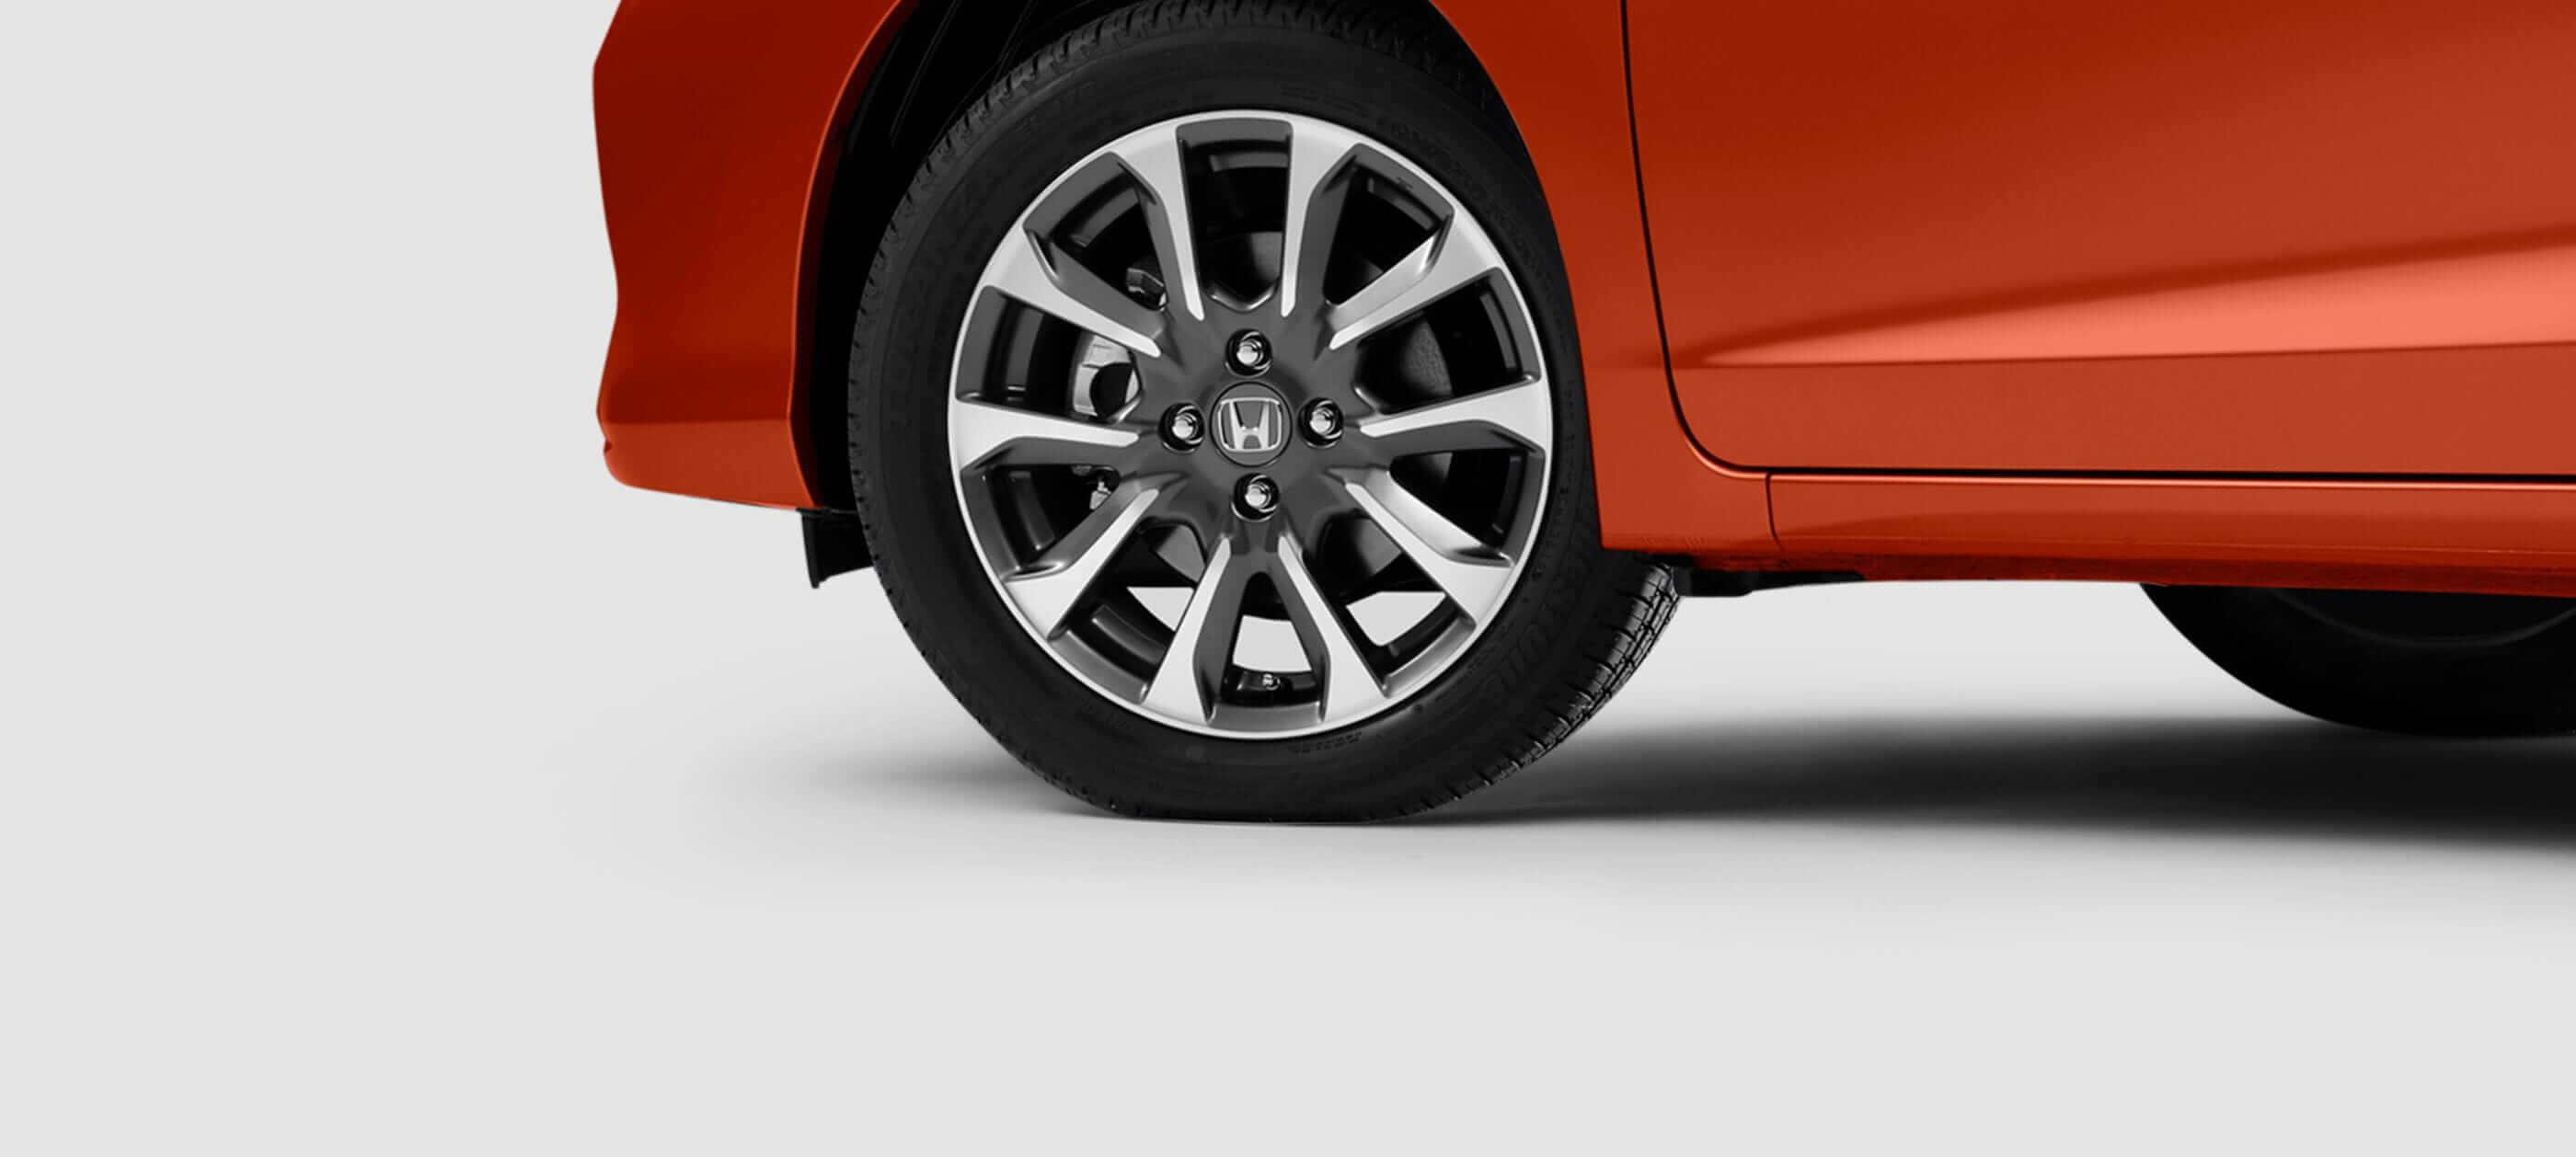 Denver Honda Fit 16-inch Alloy Wheels